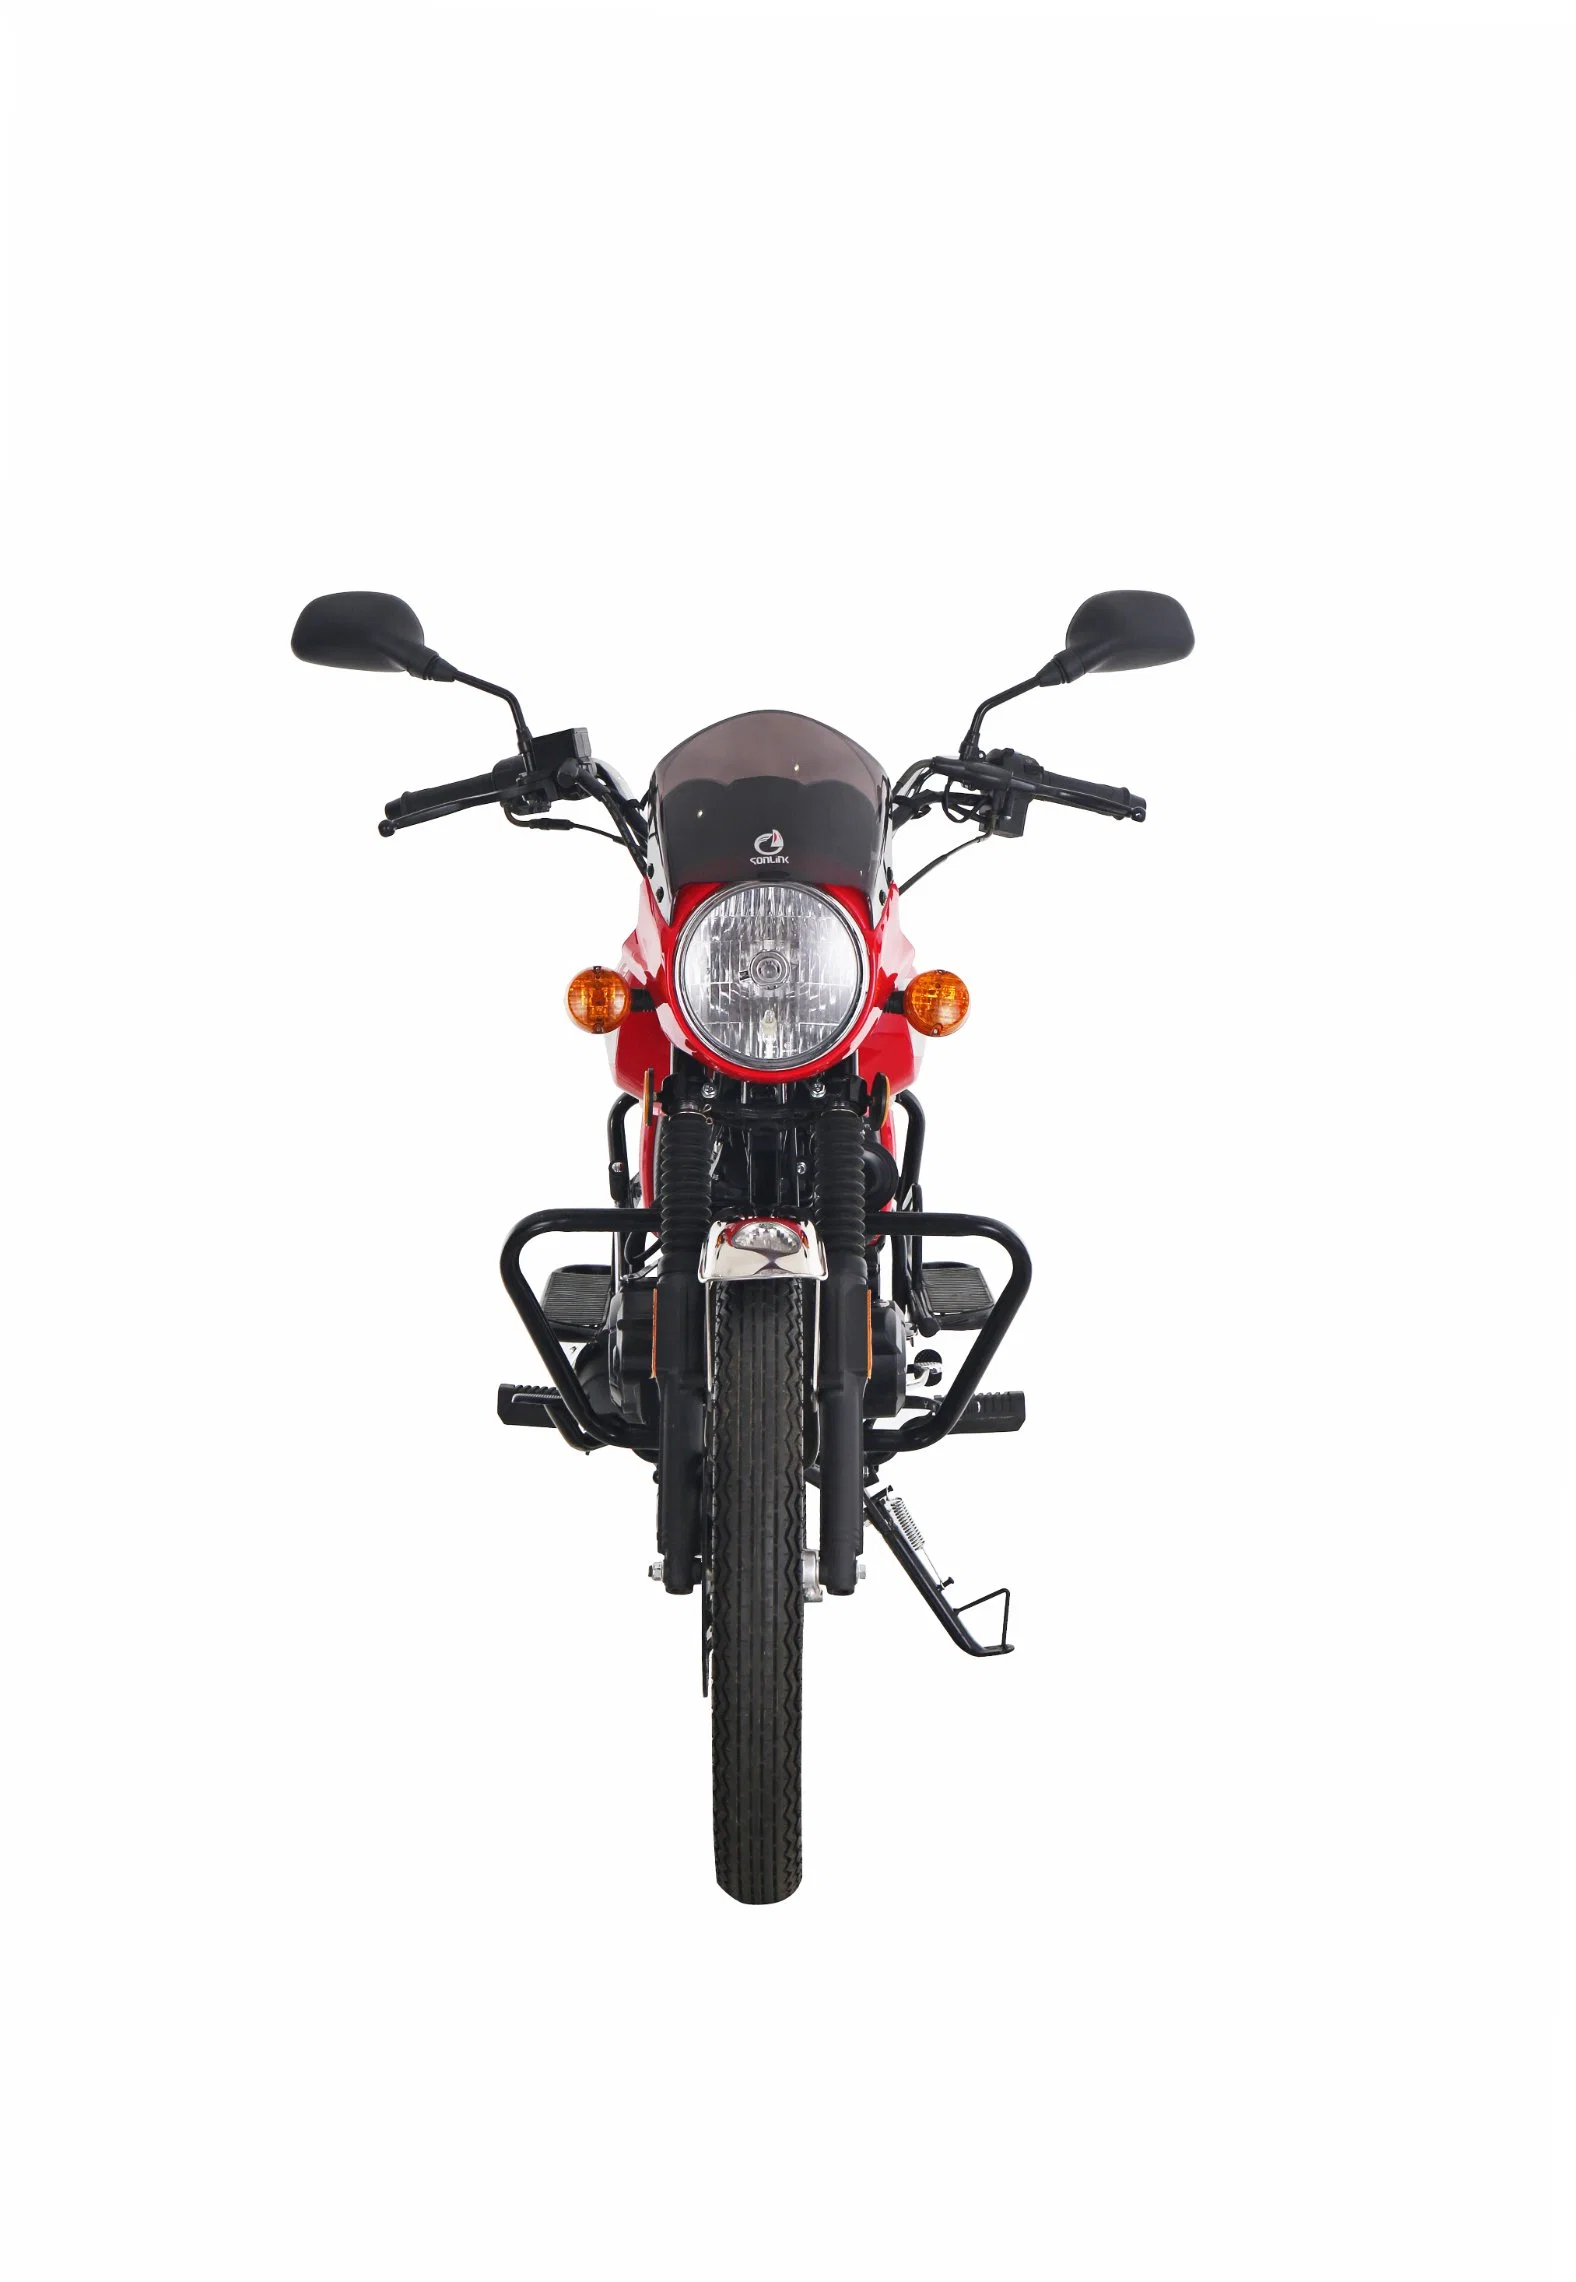 Loisir Moto 150cc Moto / 200cc motocicleta / 150cc suciedad Bicicleta / bicicleta eléctrica